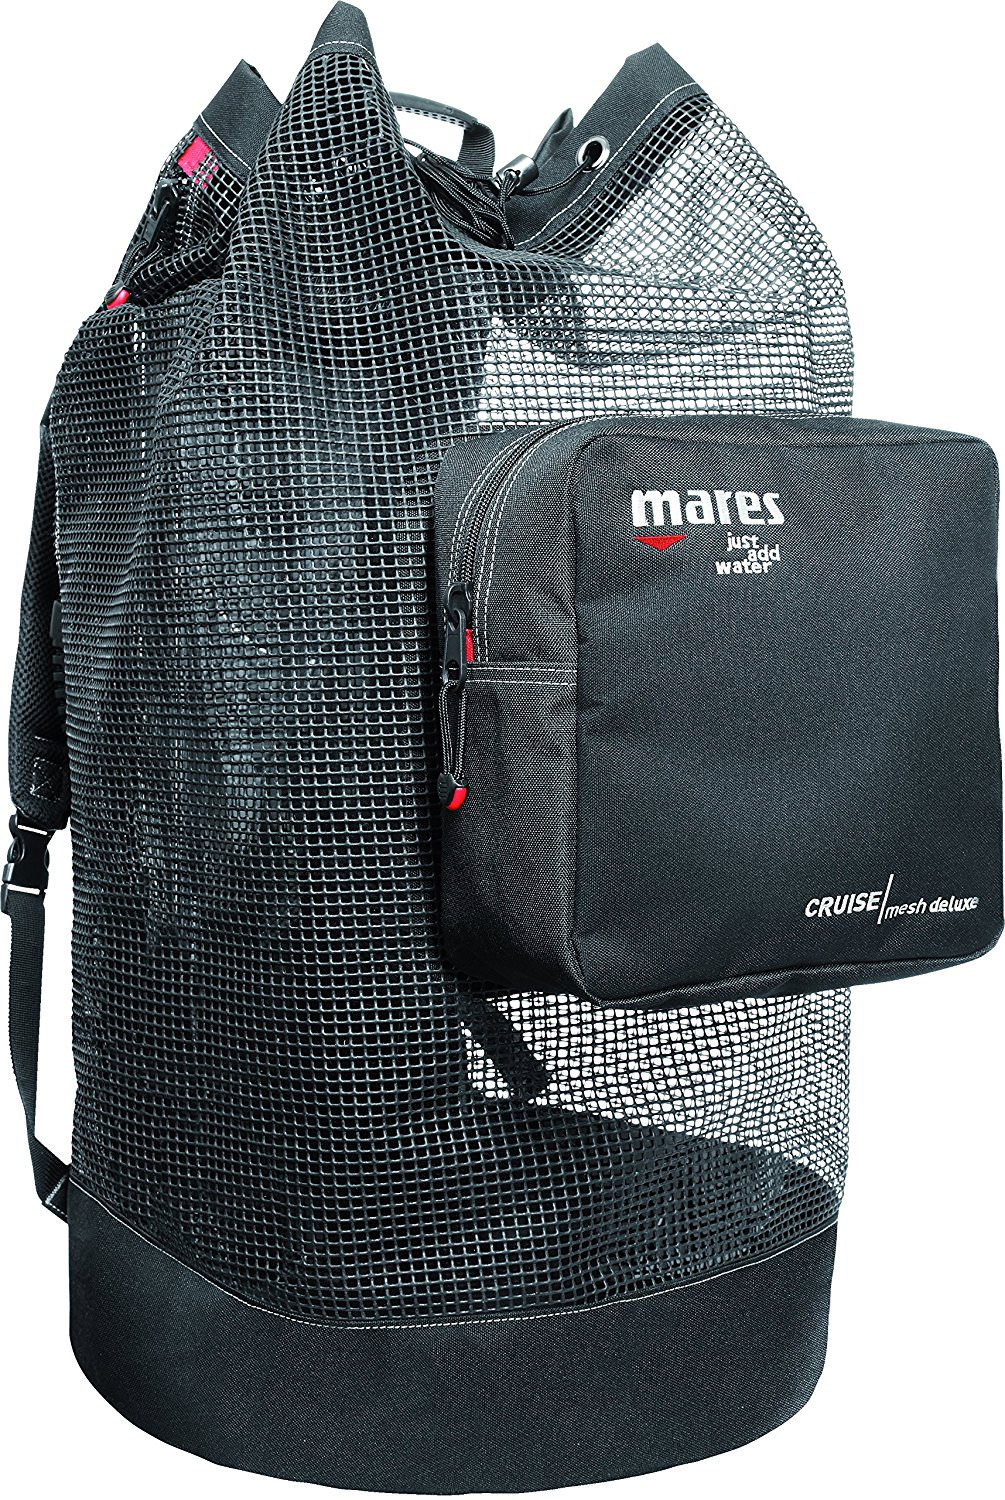 mares BCD Traveling bag